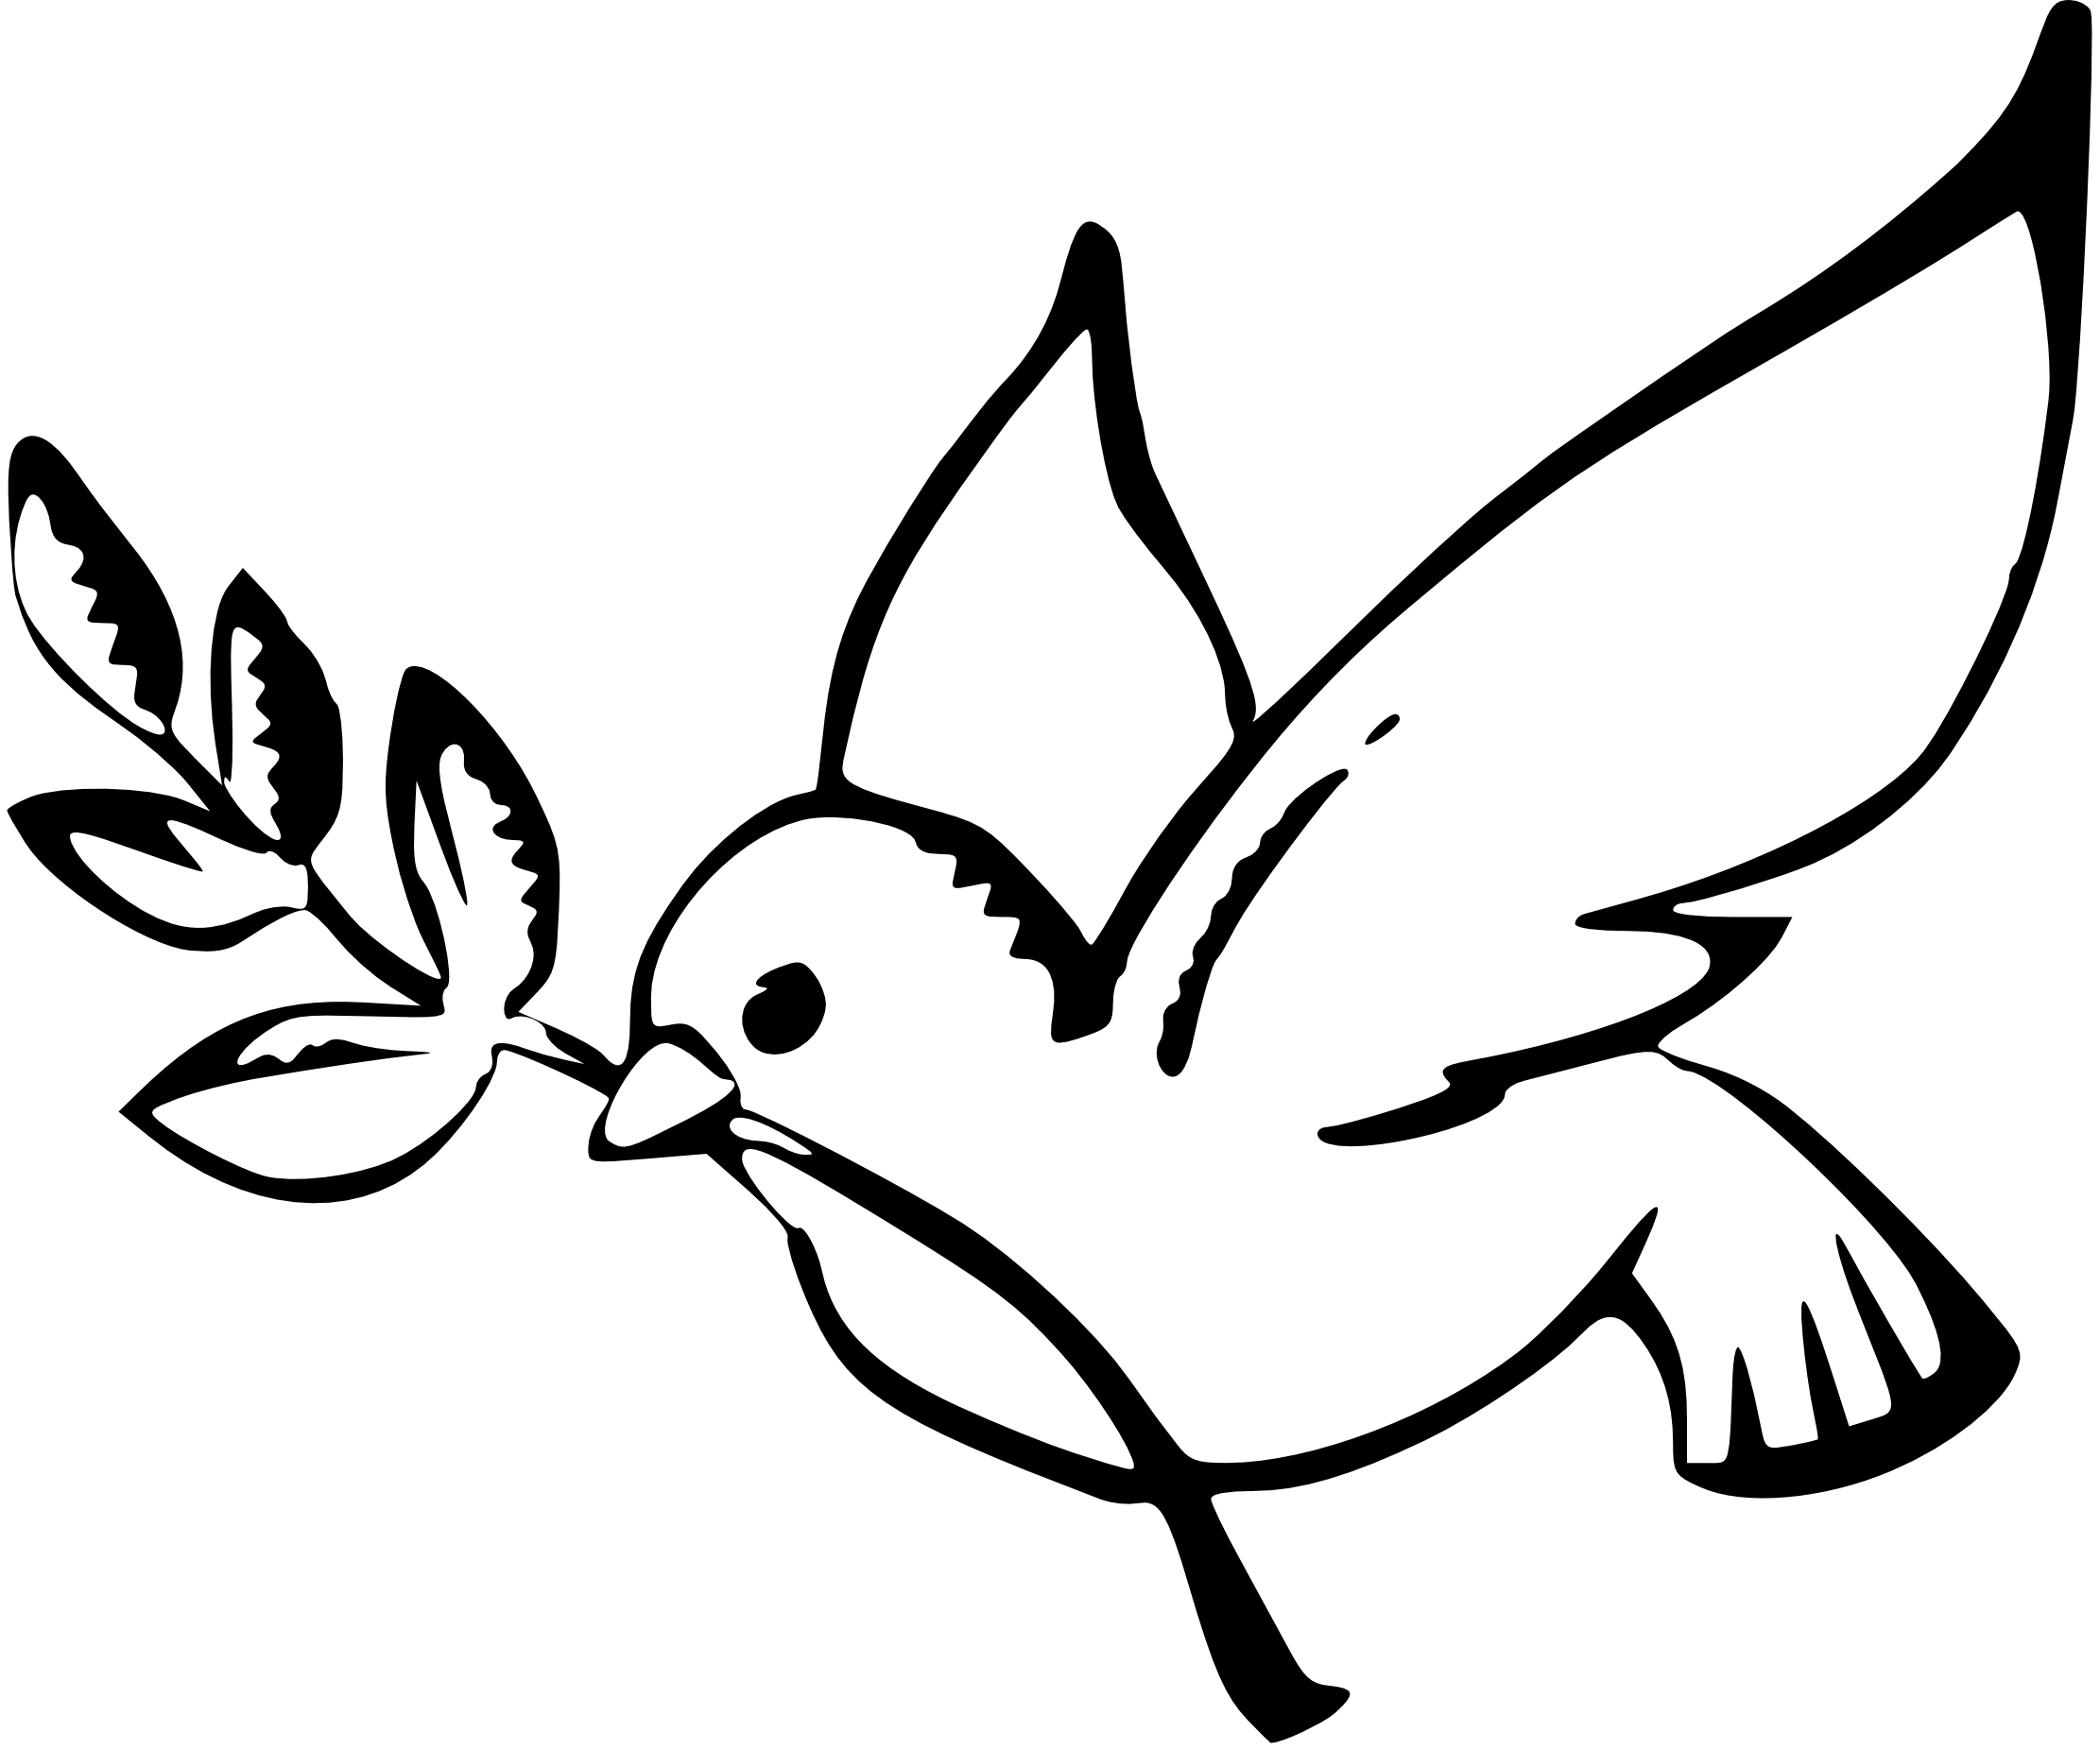 Peace peace order